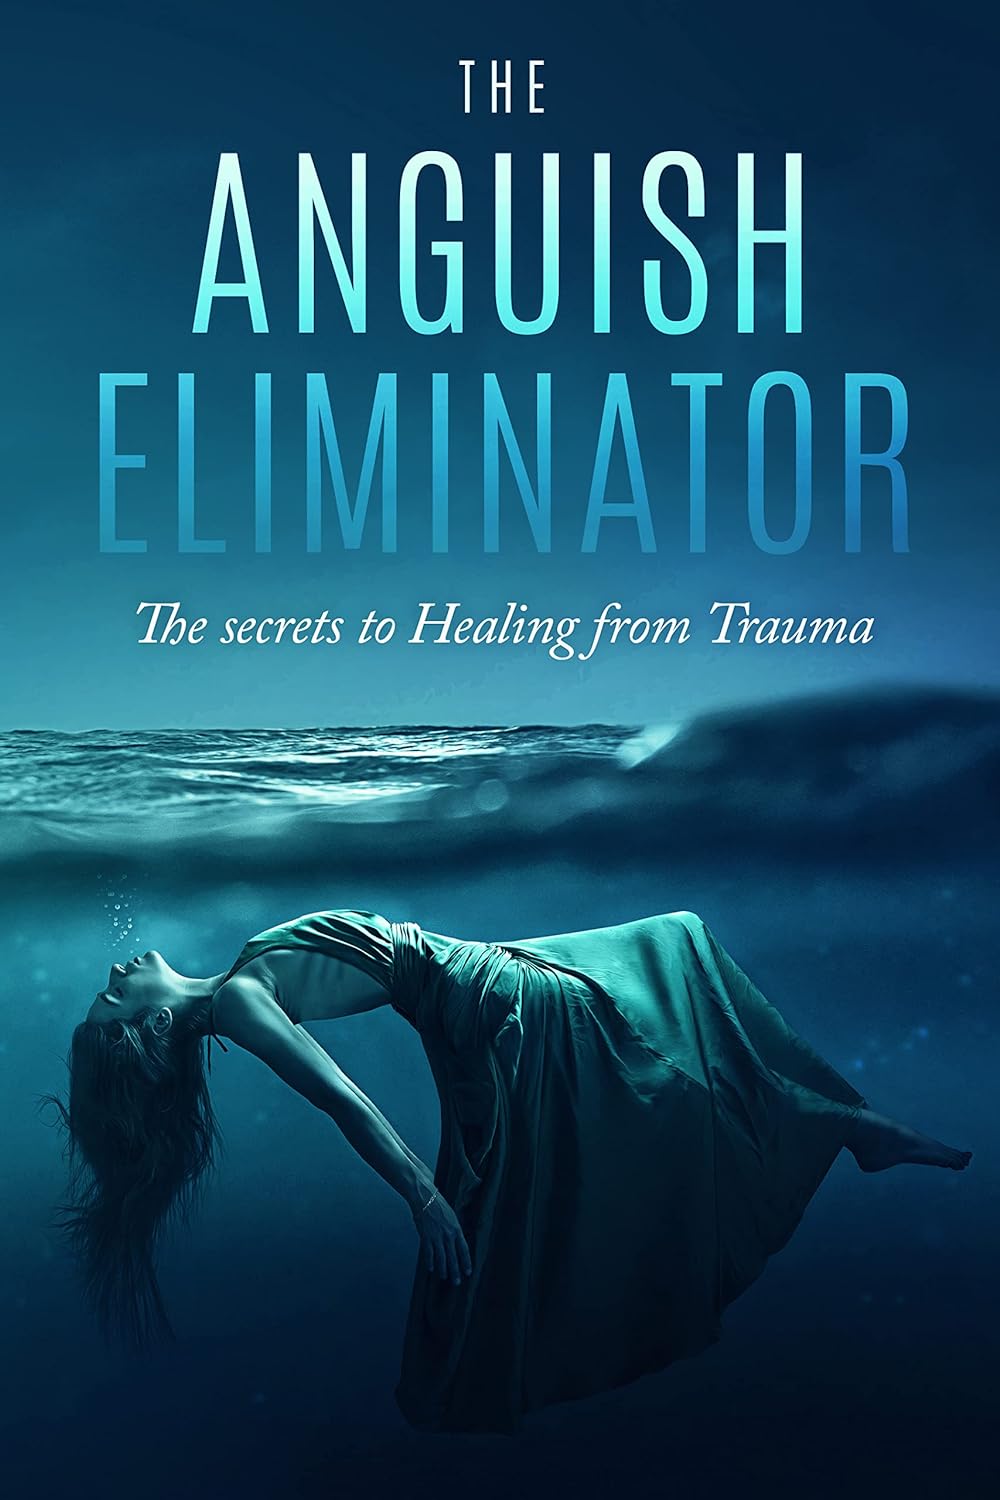 Jayne Watson talks about her latest book “The Anguish Eliminator” on The Zach Feldman Show